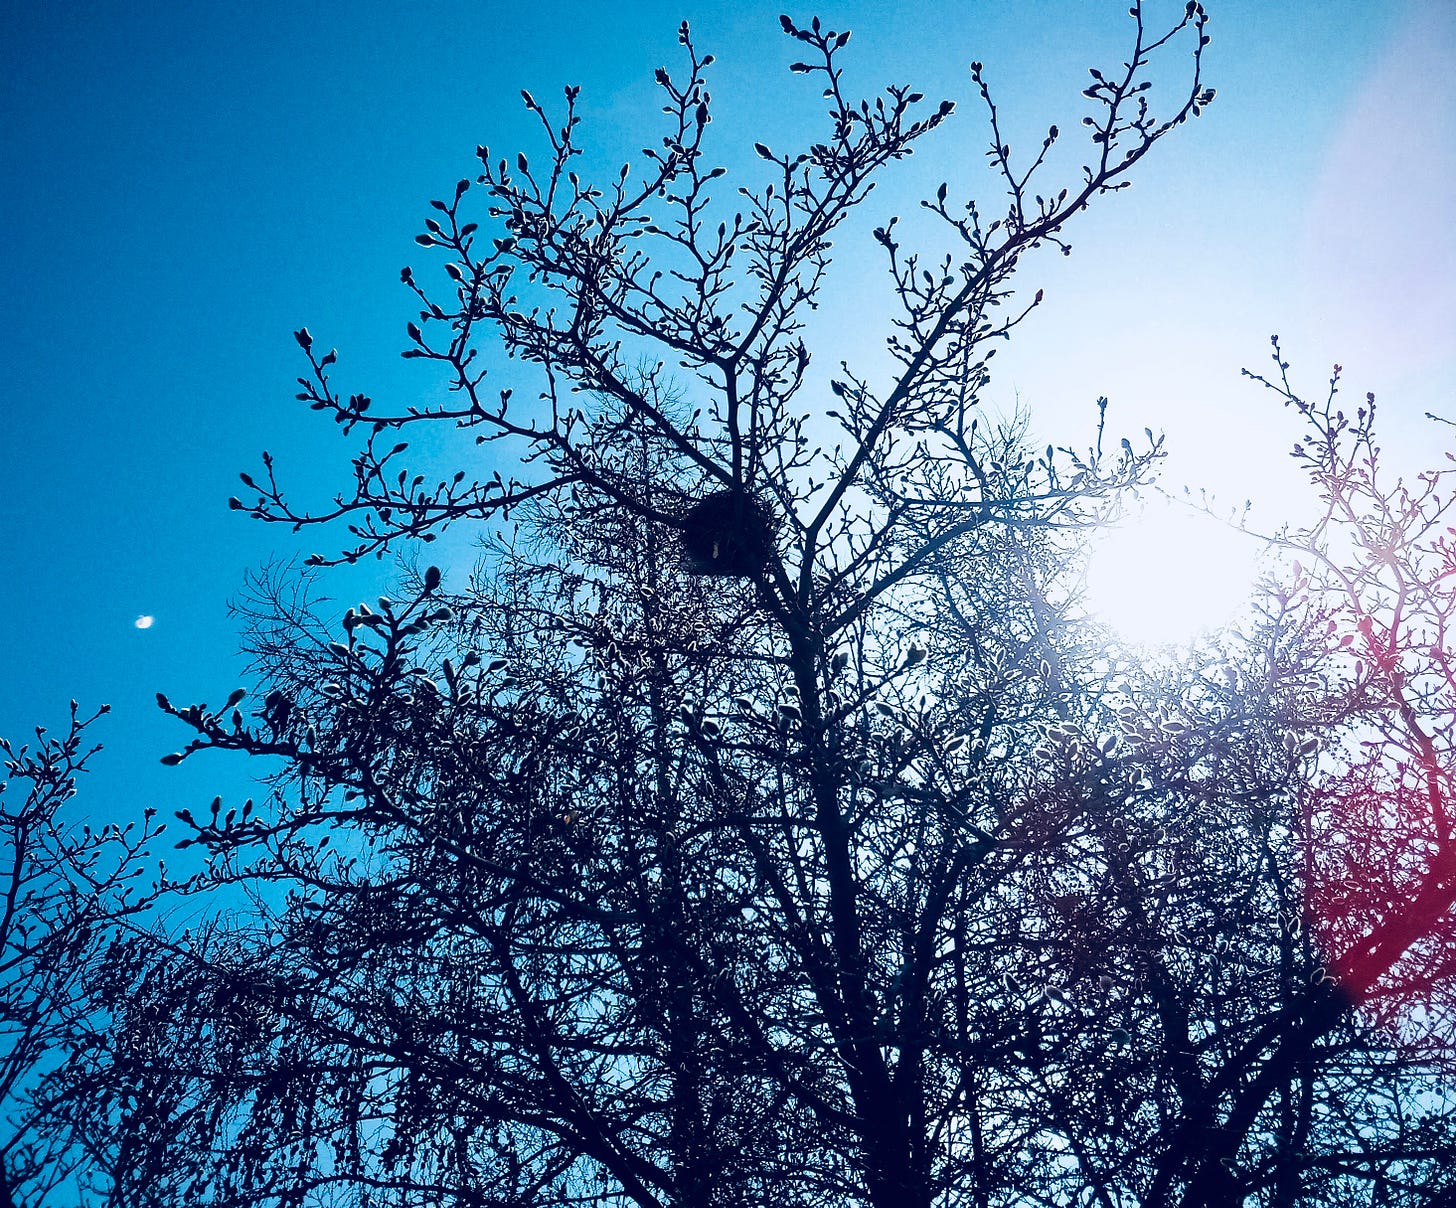 tree with bird's nest